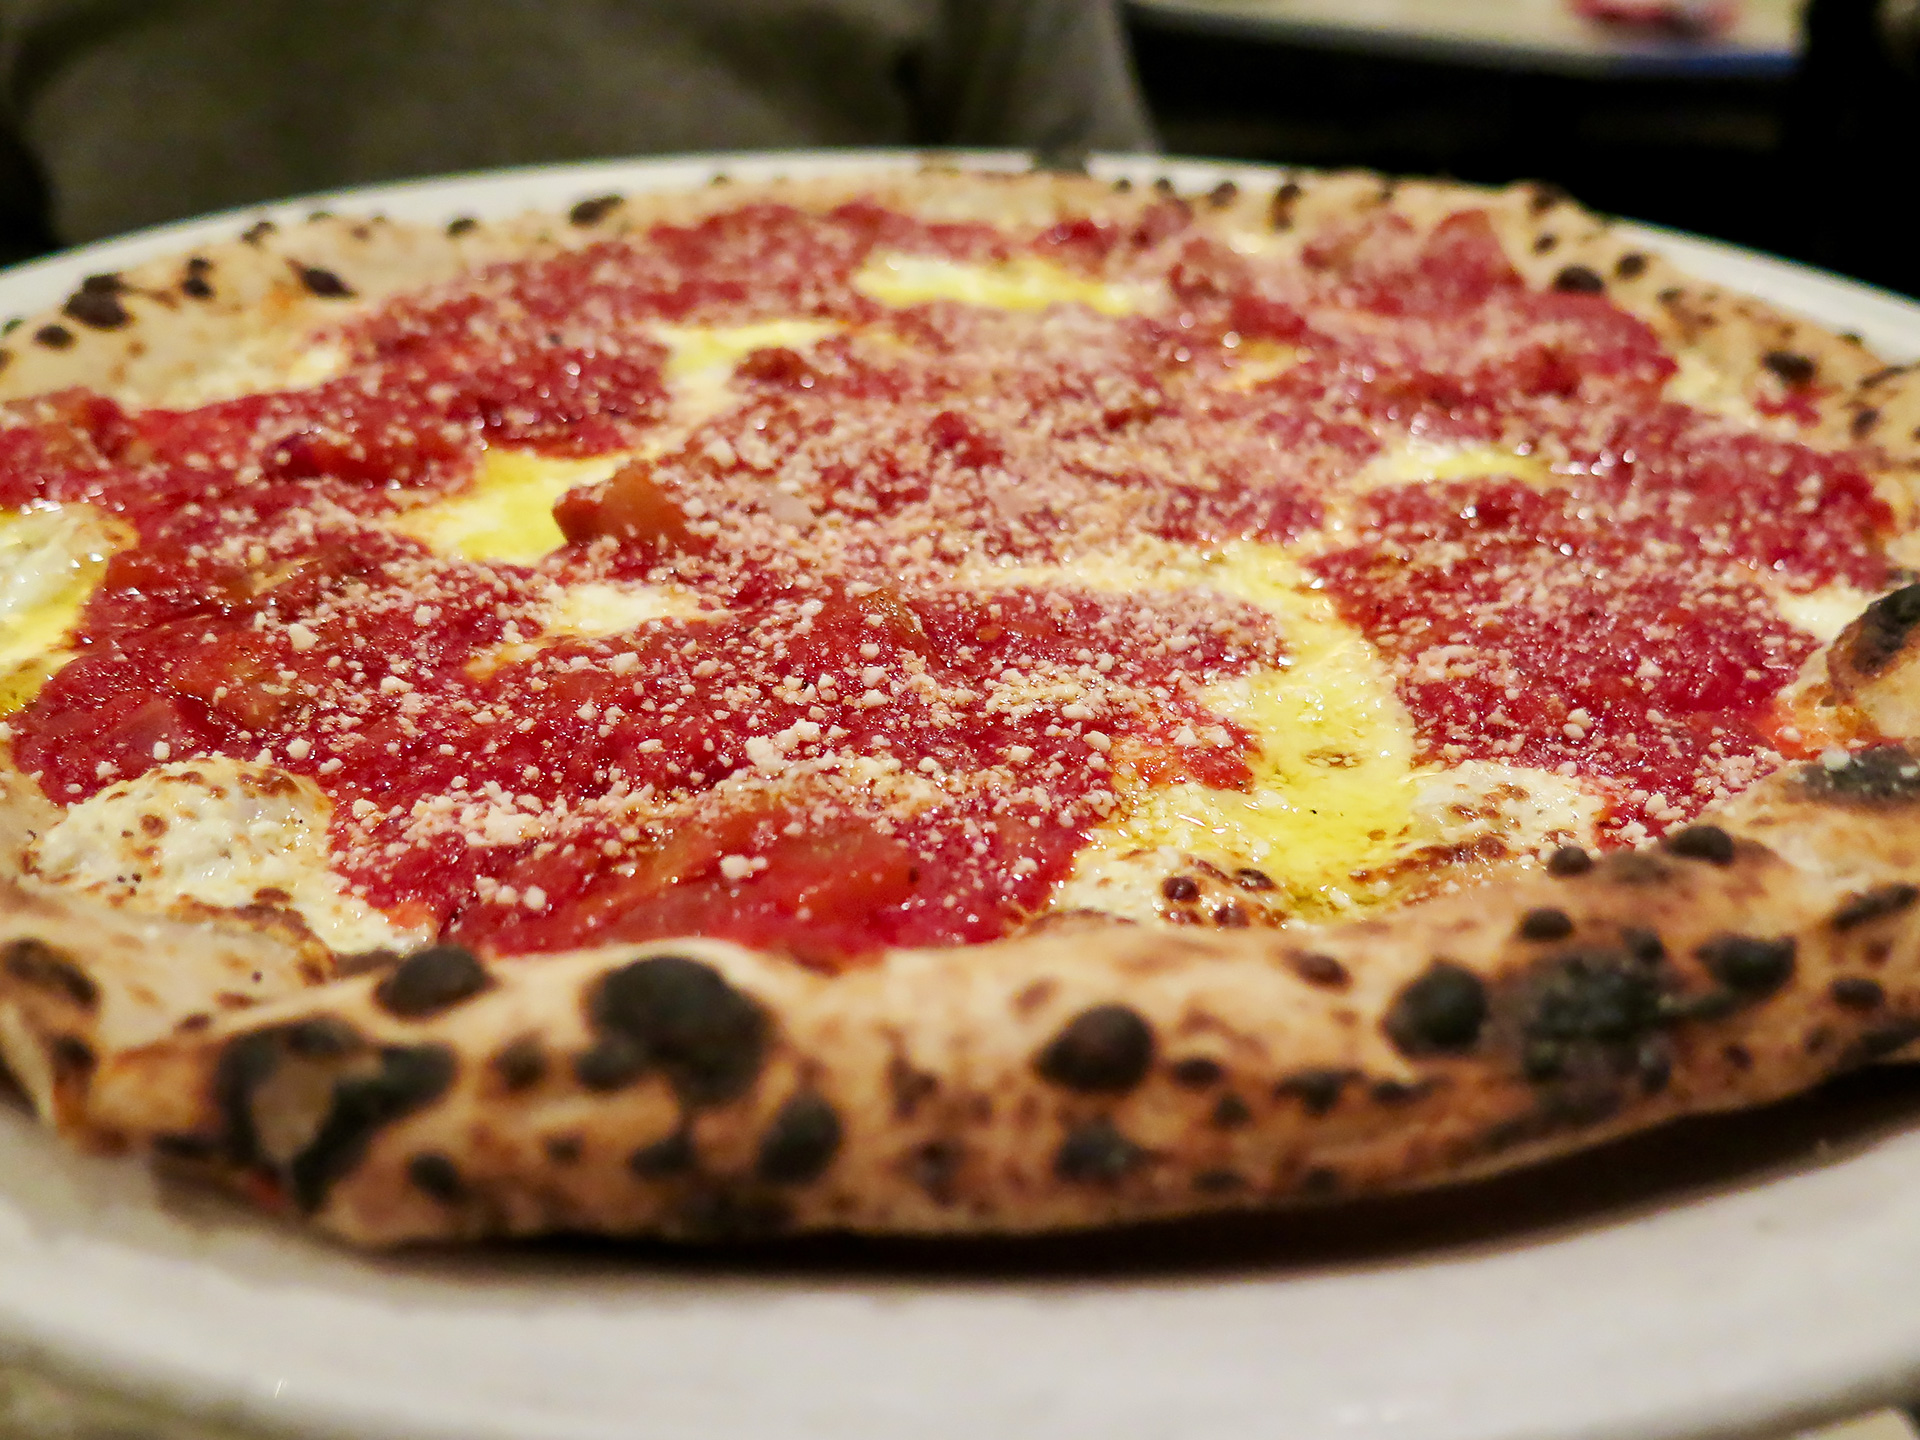 It’s time for amatriciana pizza. The saucy version at Tony’s Pizza Napoletana.